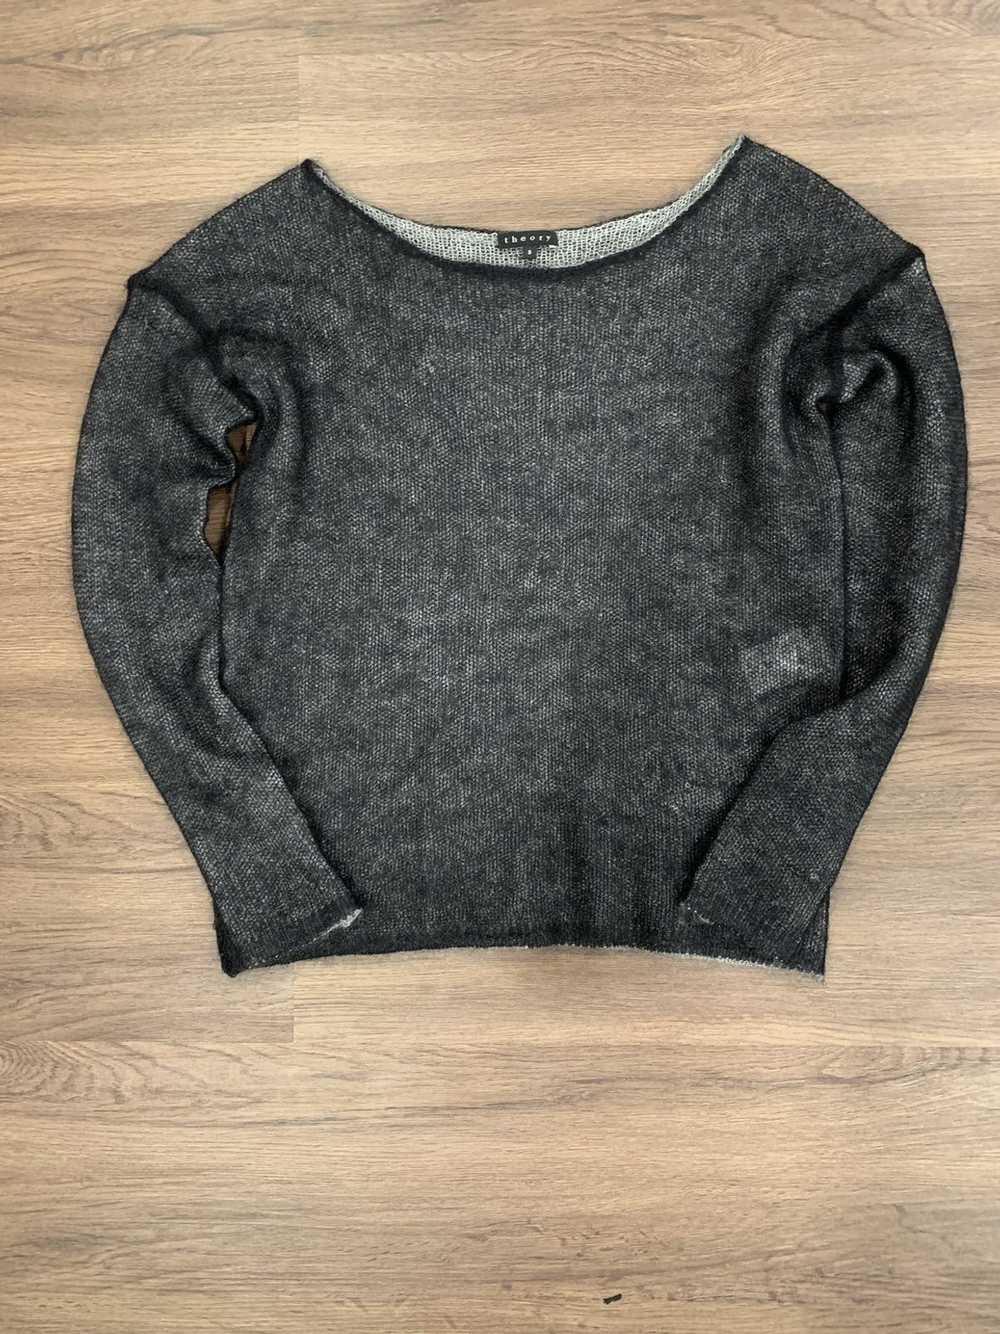 Japanese Brand × Theory Theory Japan knit sweater - image 1